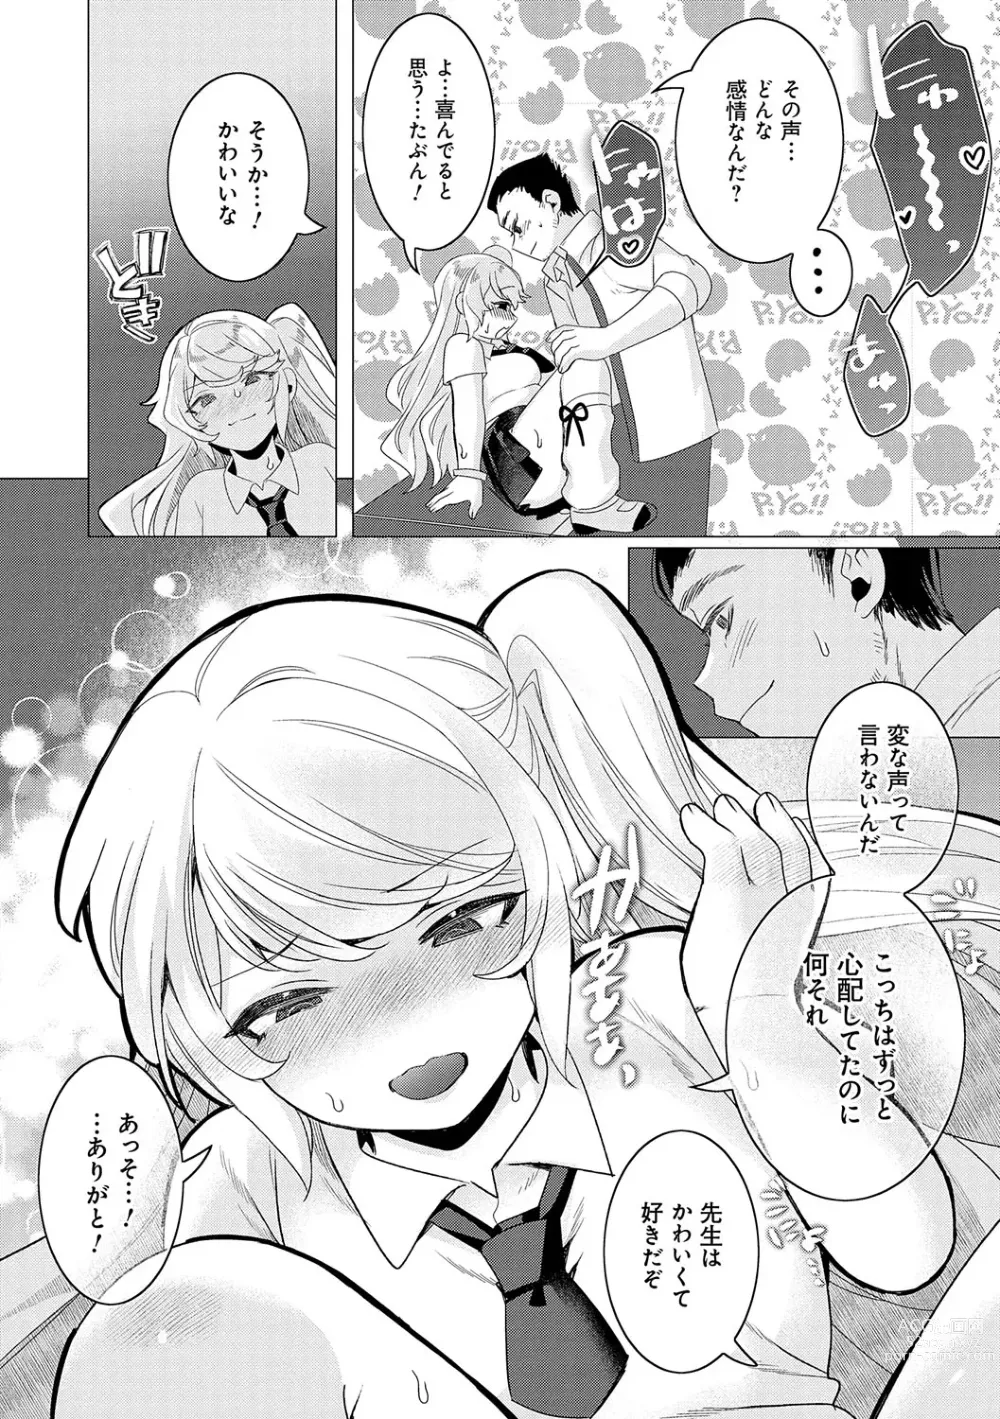 Page 13 of manga Haru biyori, koi Minori.